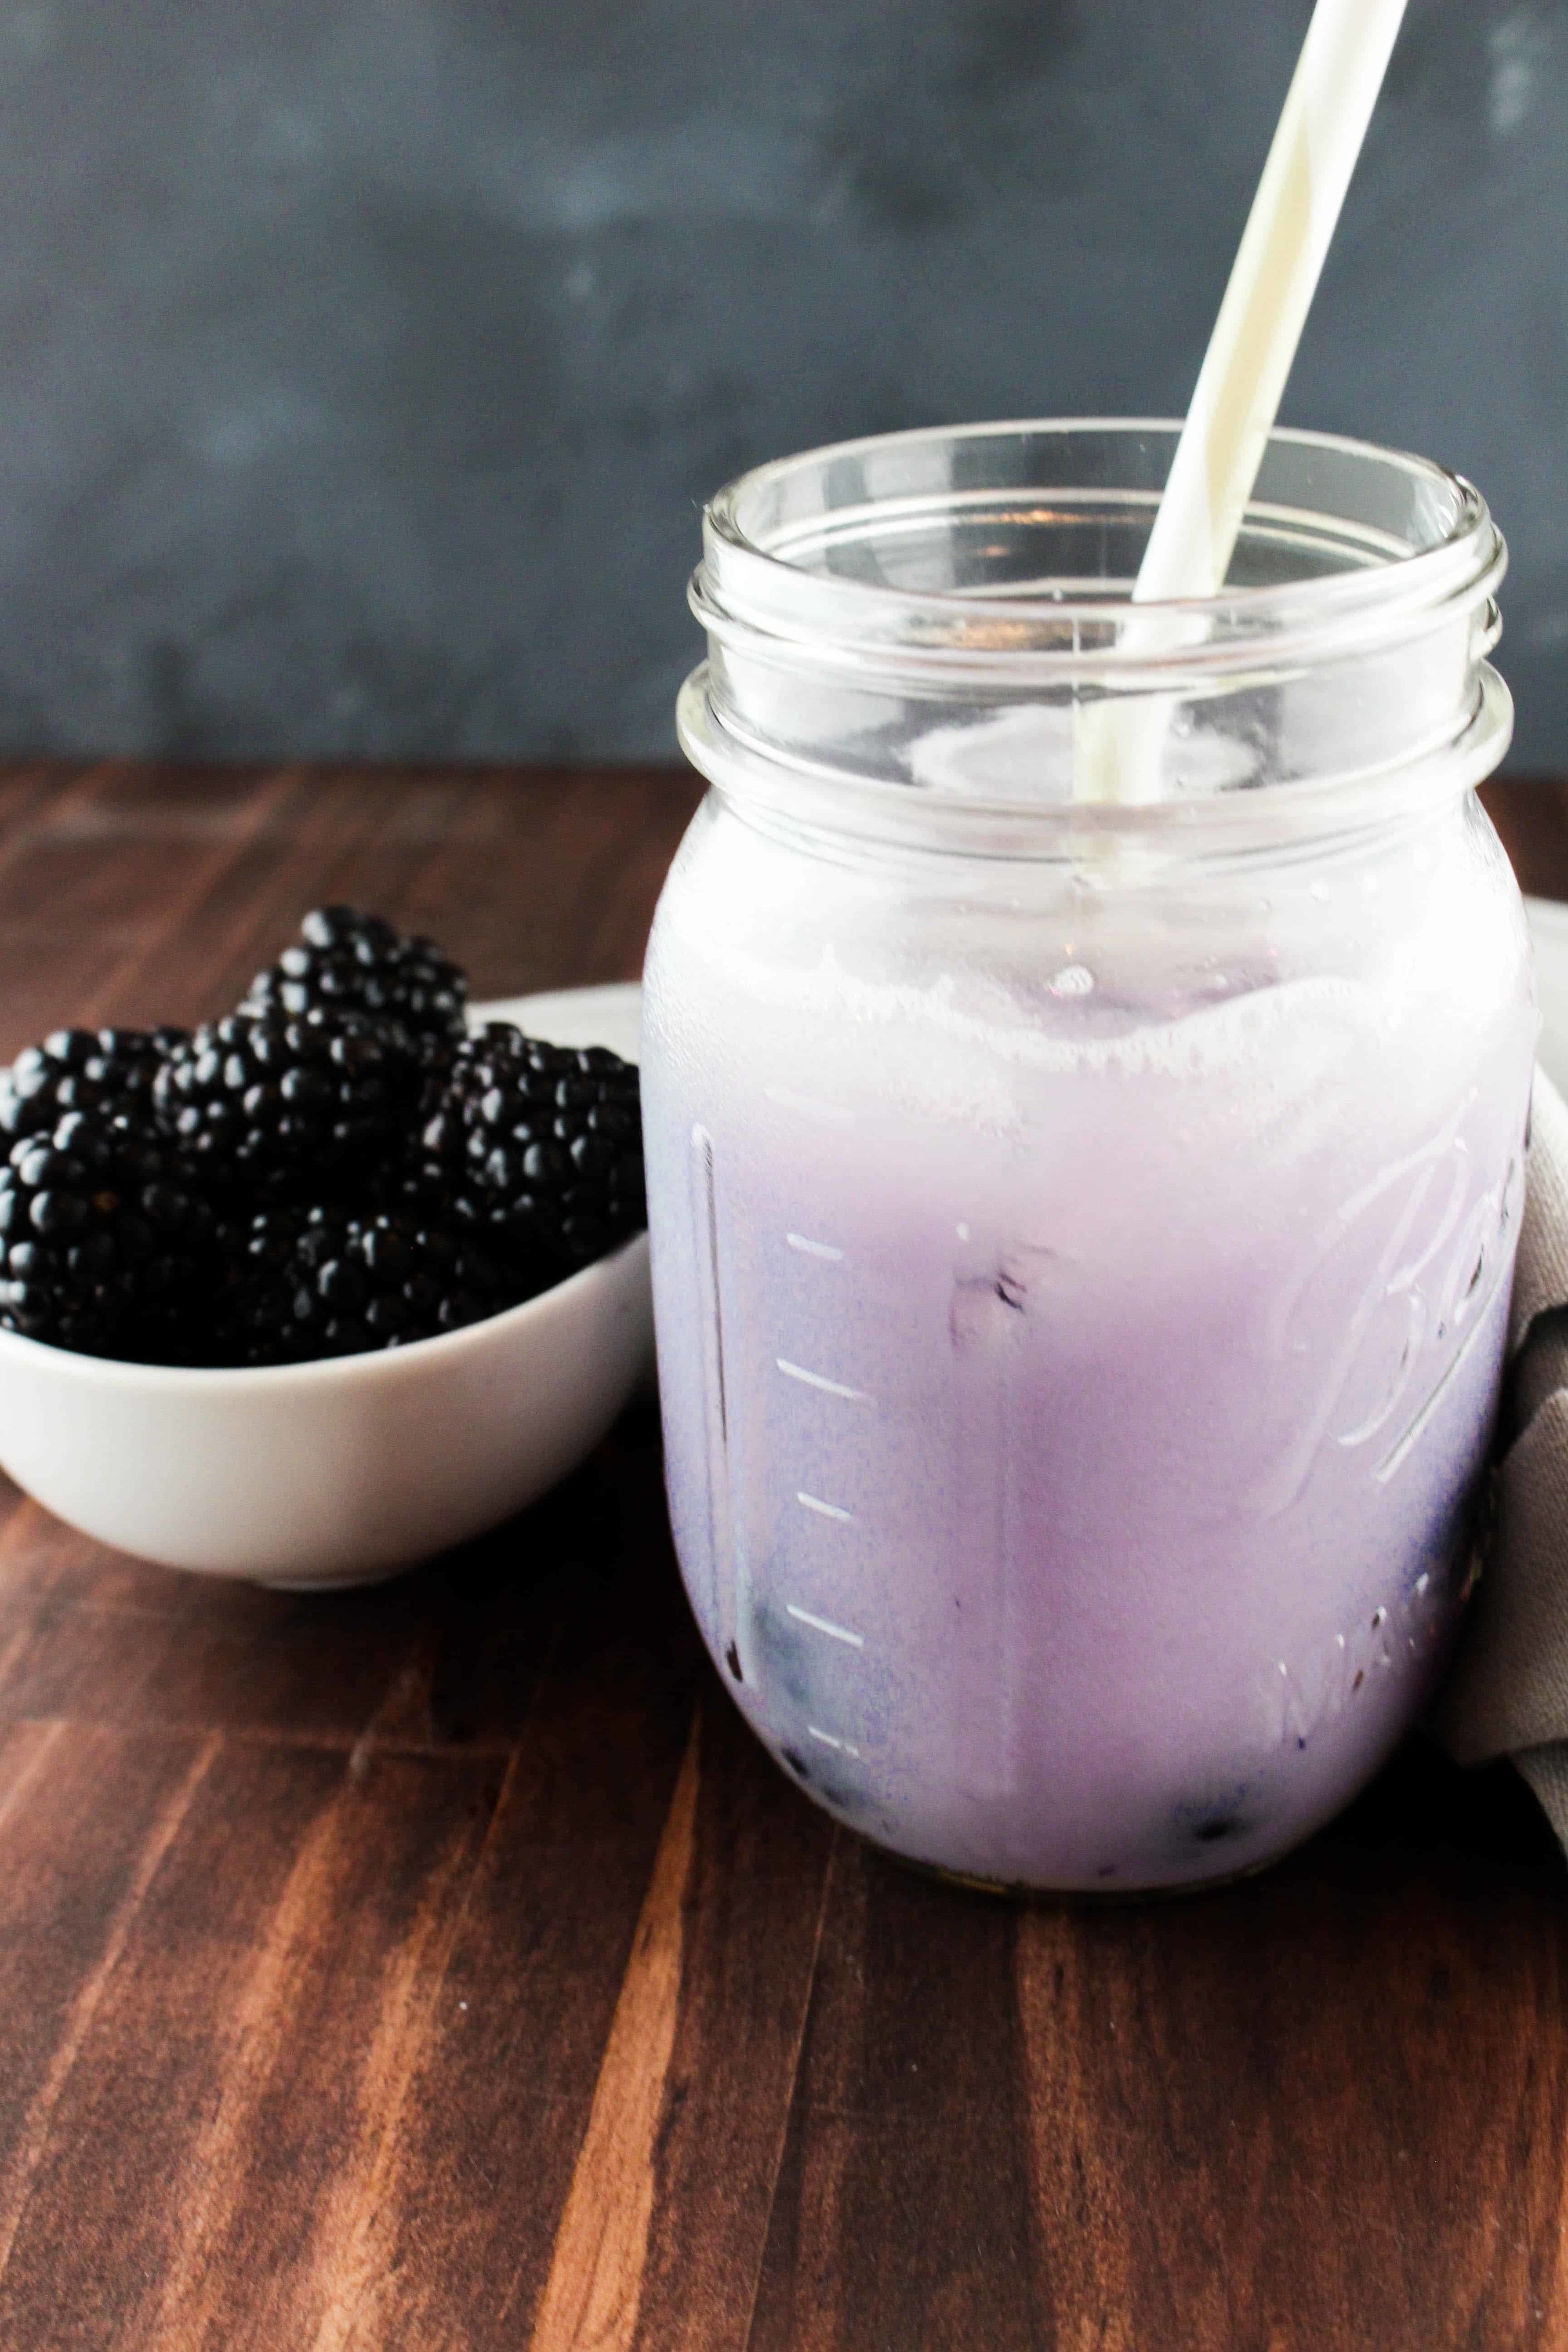 A light purple drink inside a glass Mason jar next to a bowl of blackberries